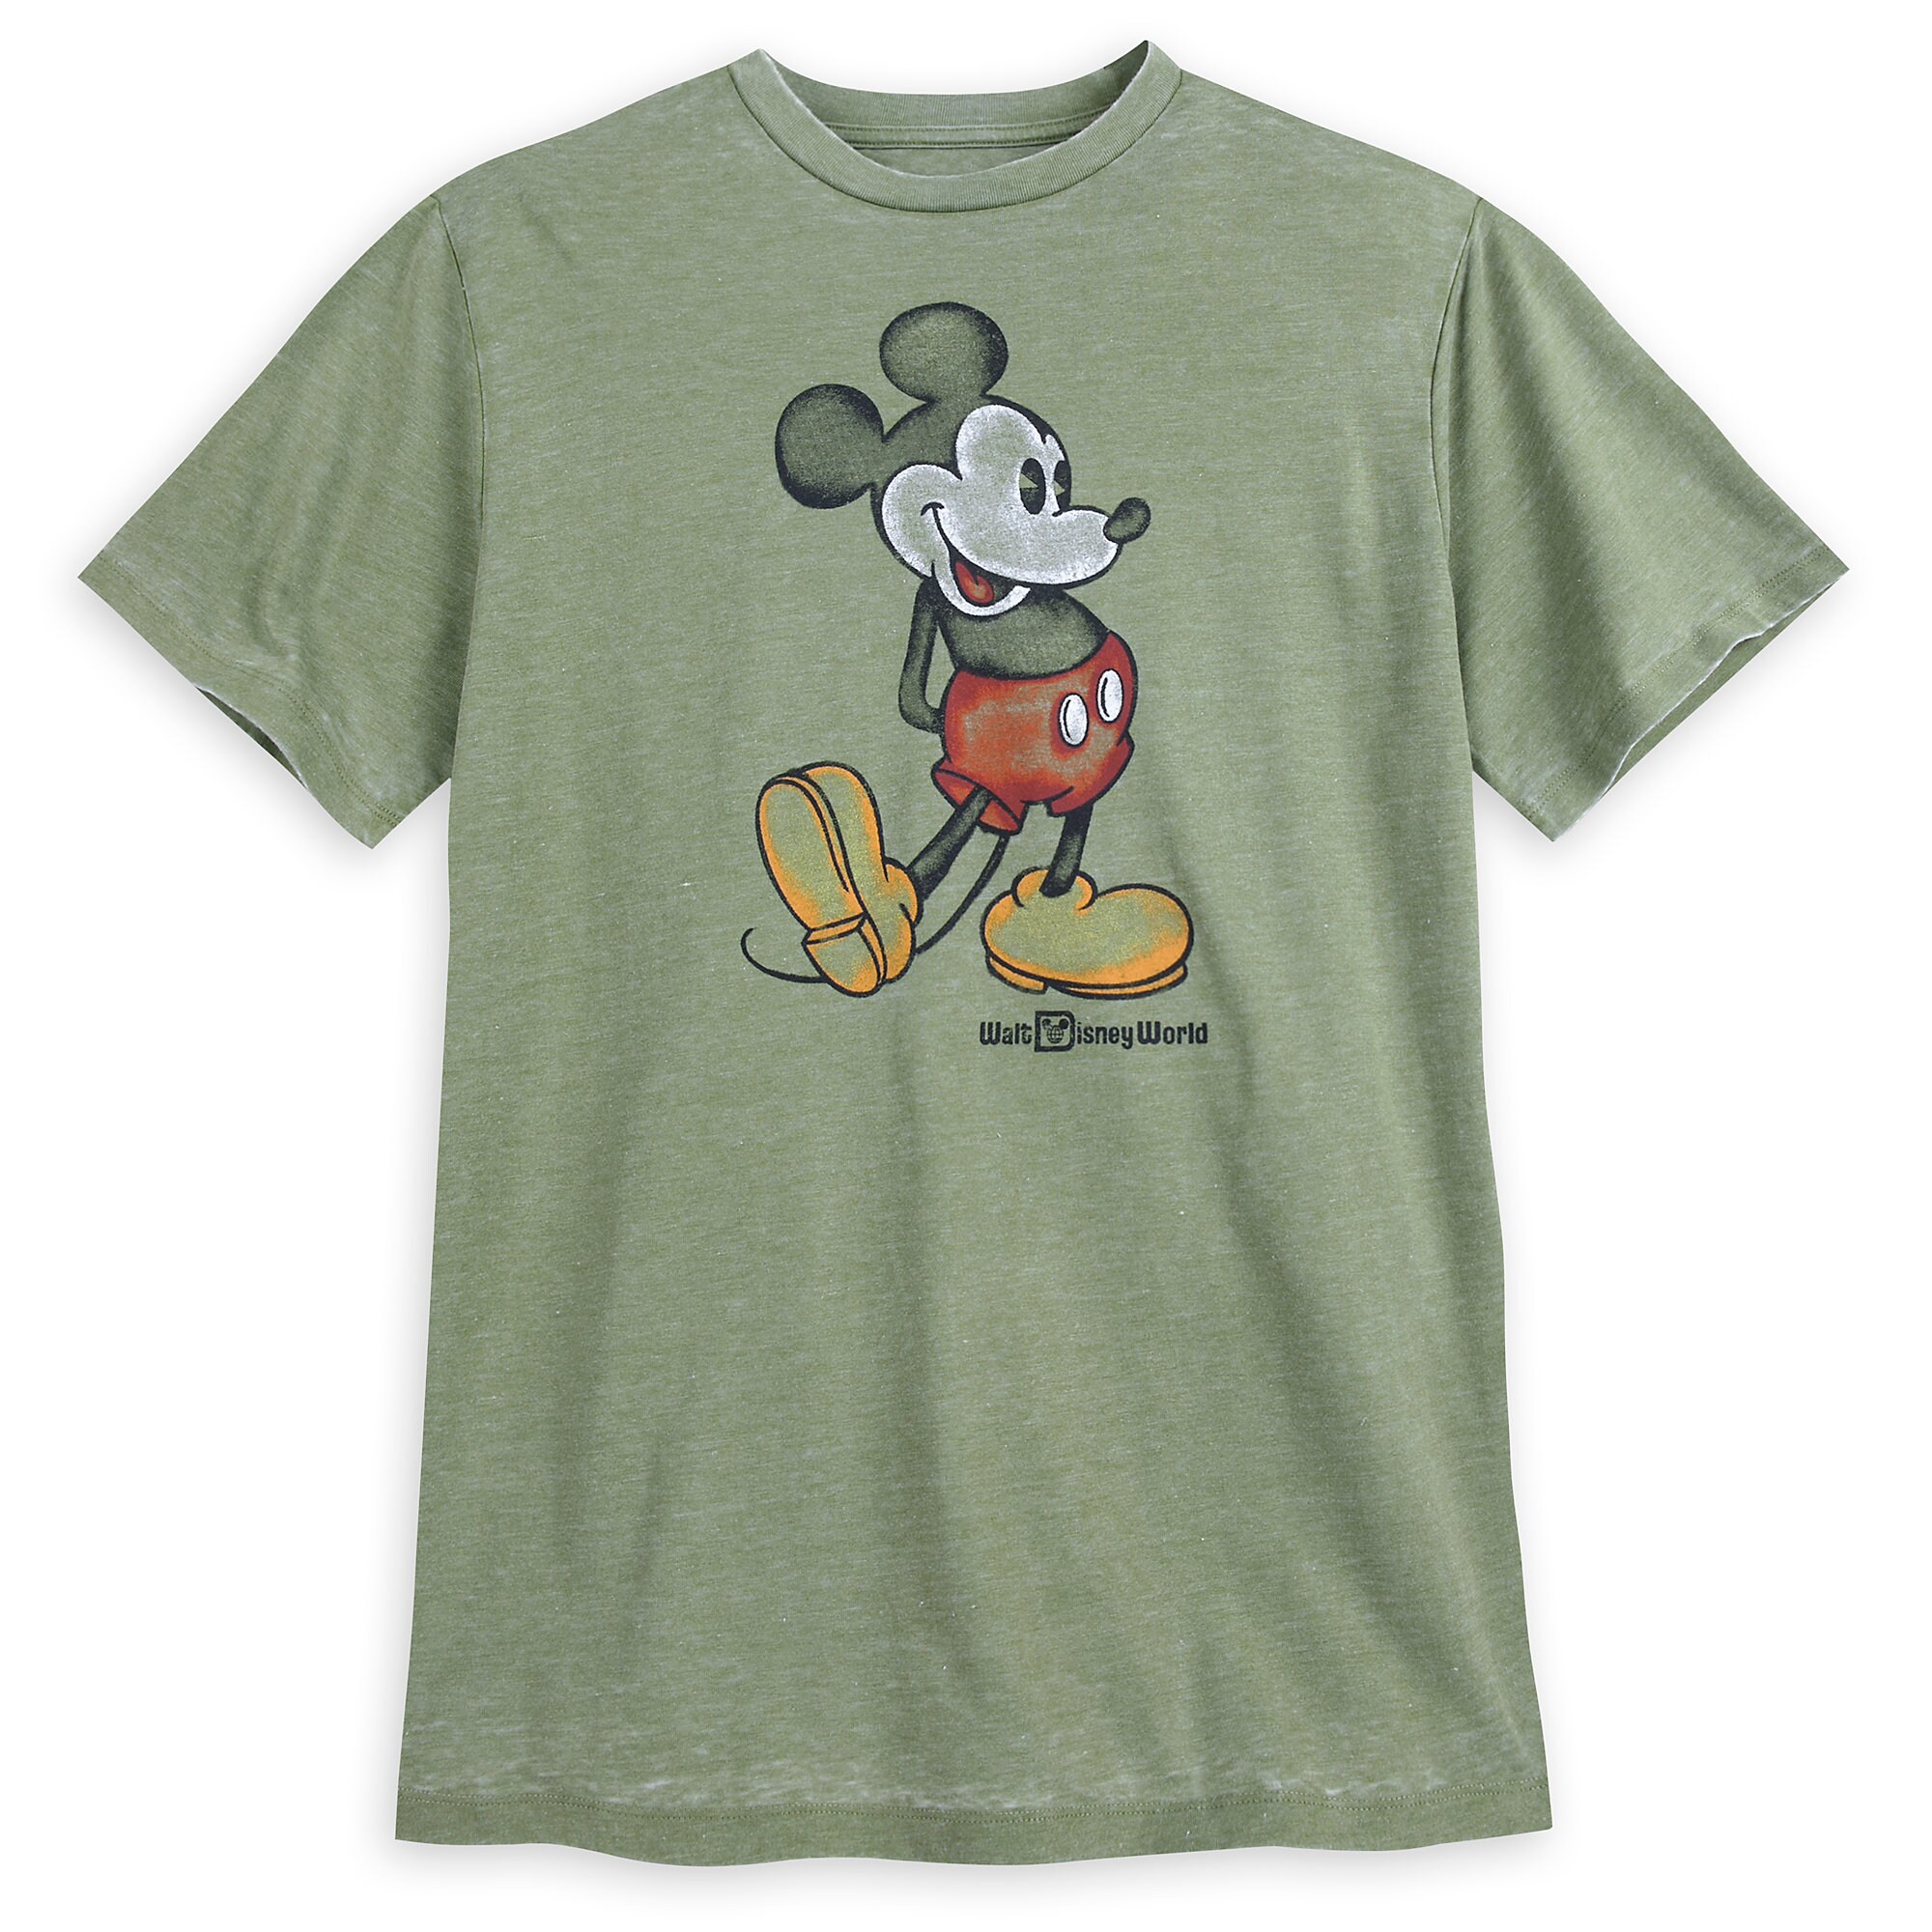 Mickey Mouse Classic T-Shirt for Men - Walt Disney World - Green